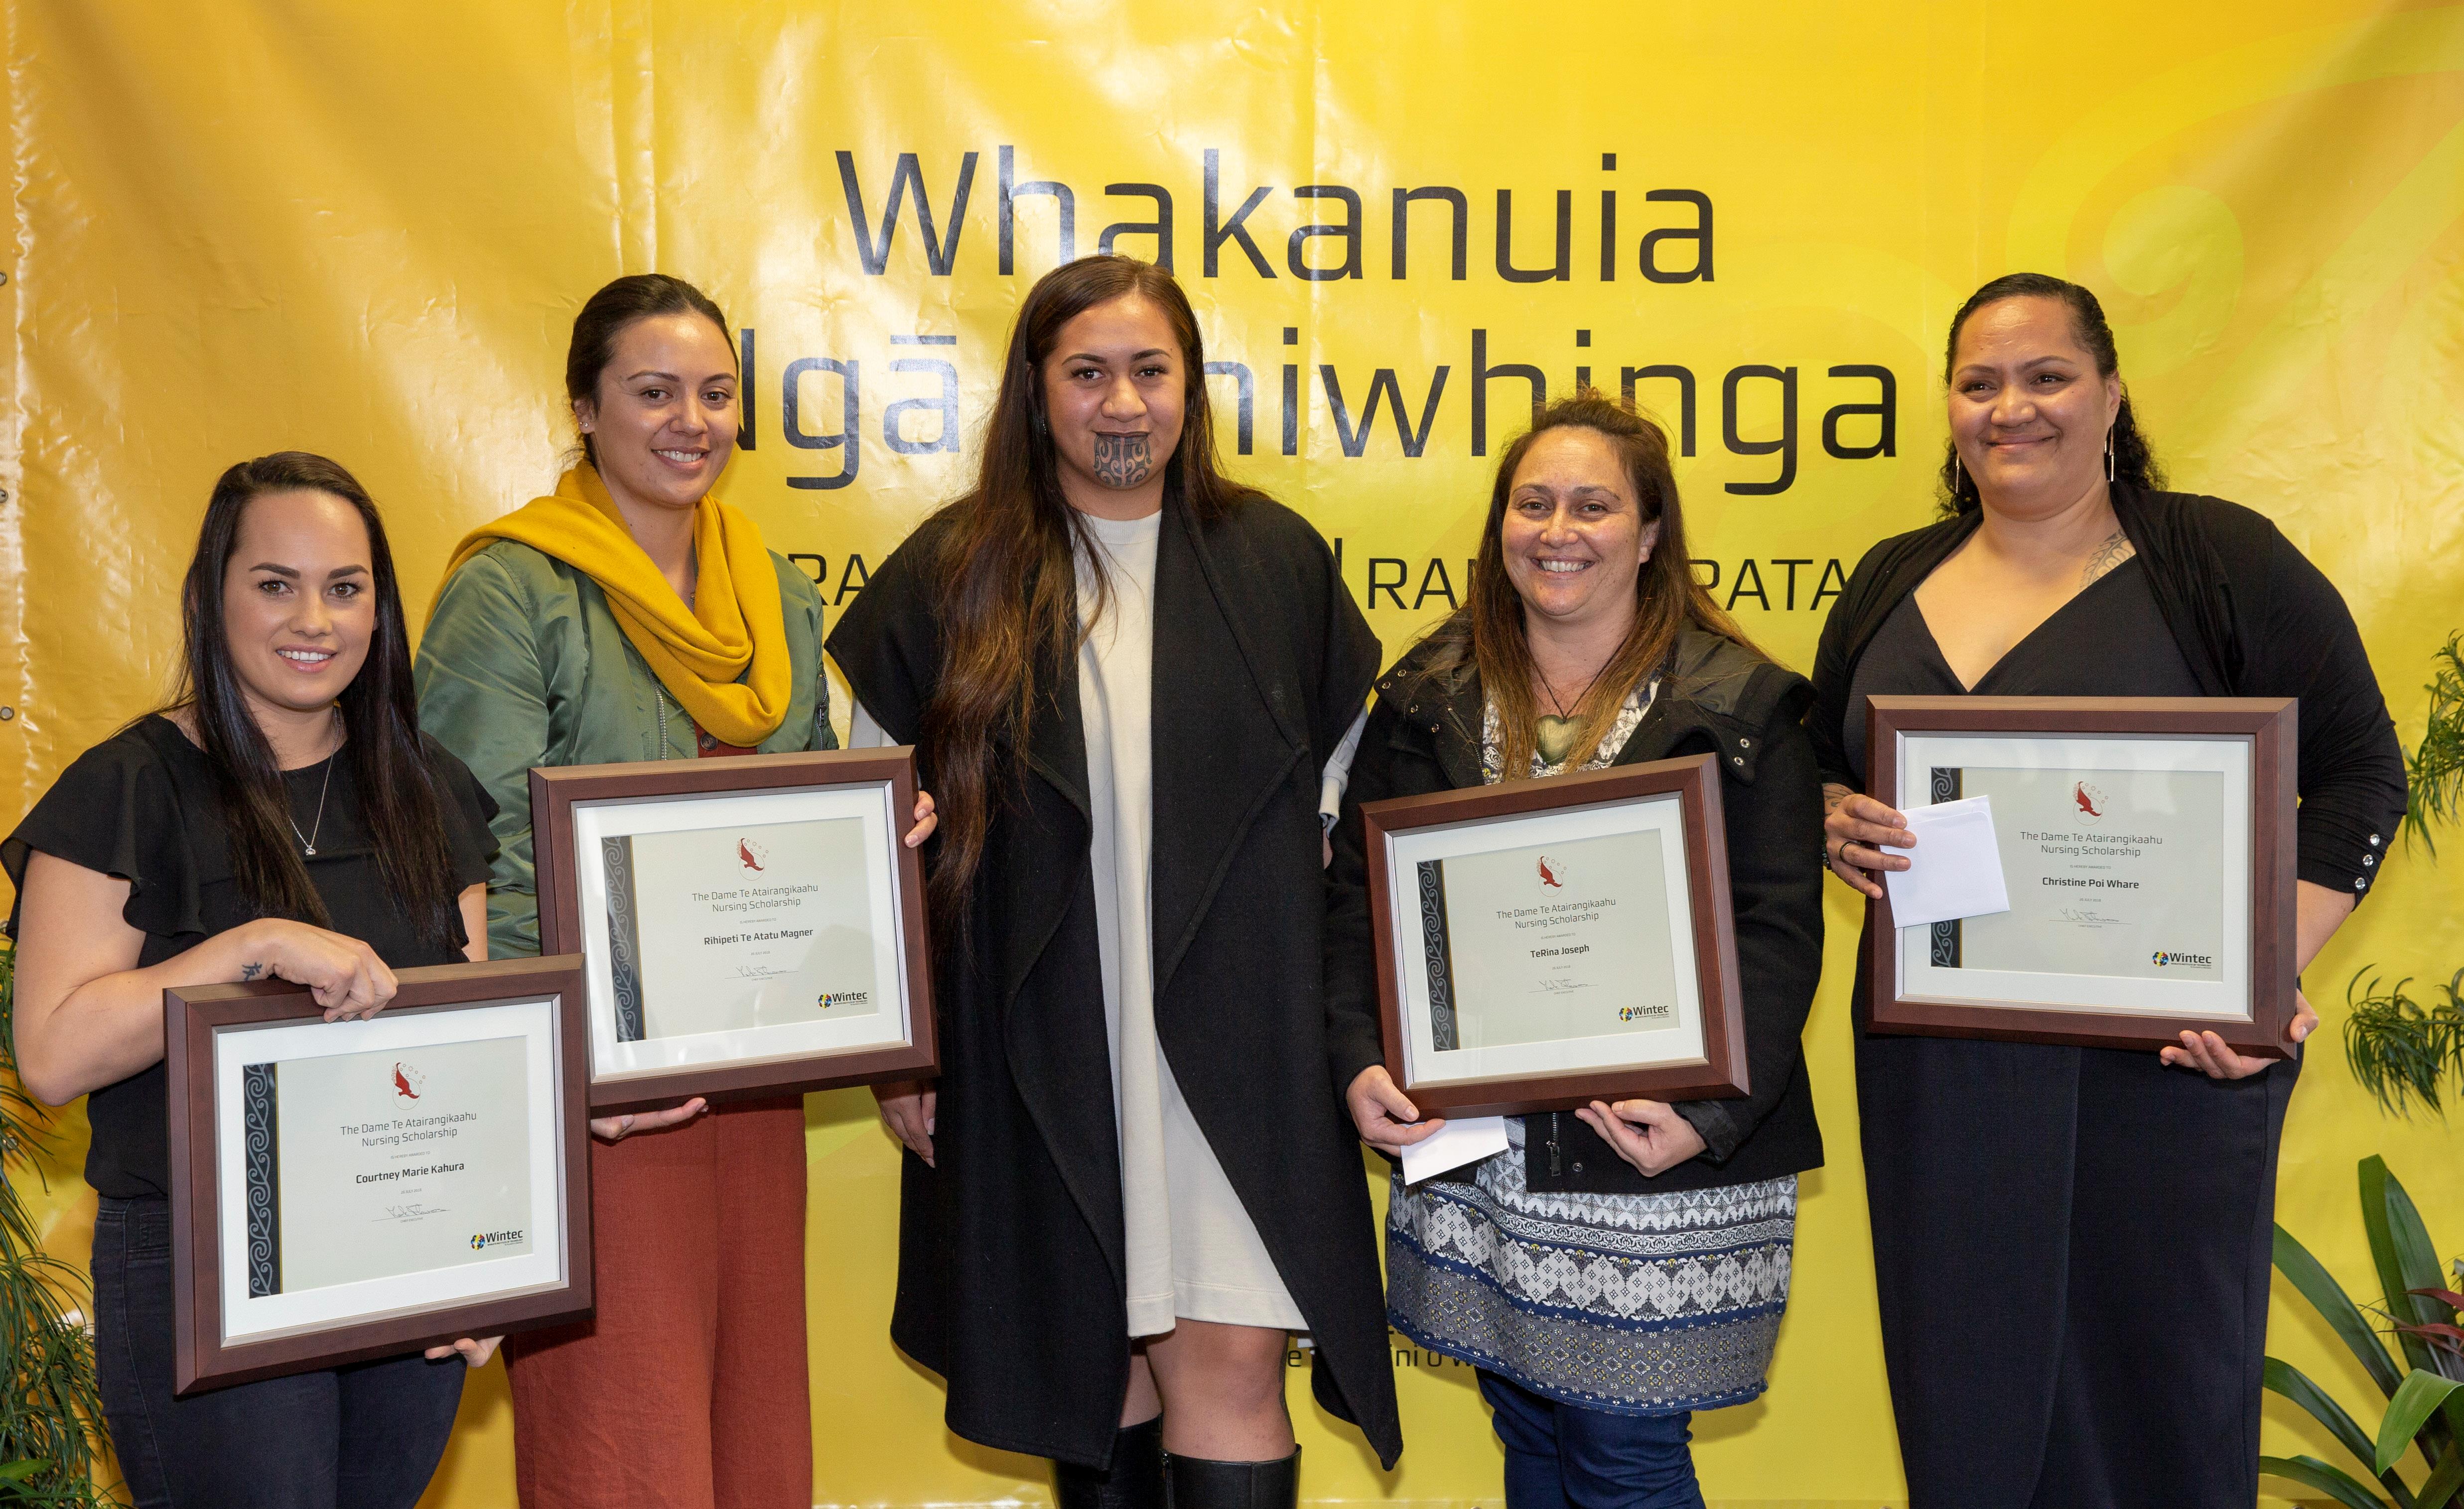  Four Wintec nursing and midwifery students have been awarded Dame Te Ātairangikaahu Nursing Scholarships